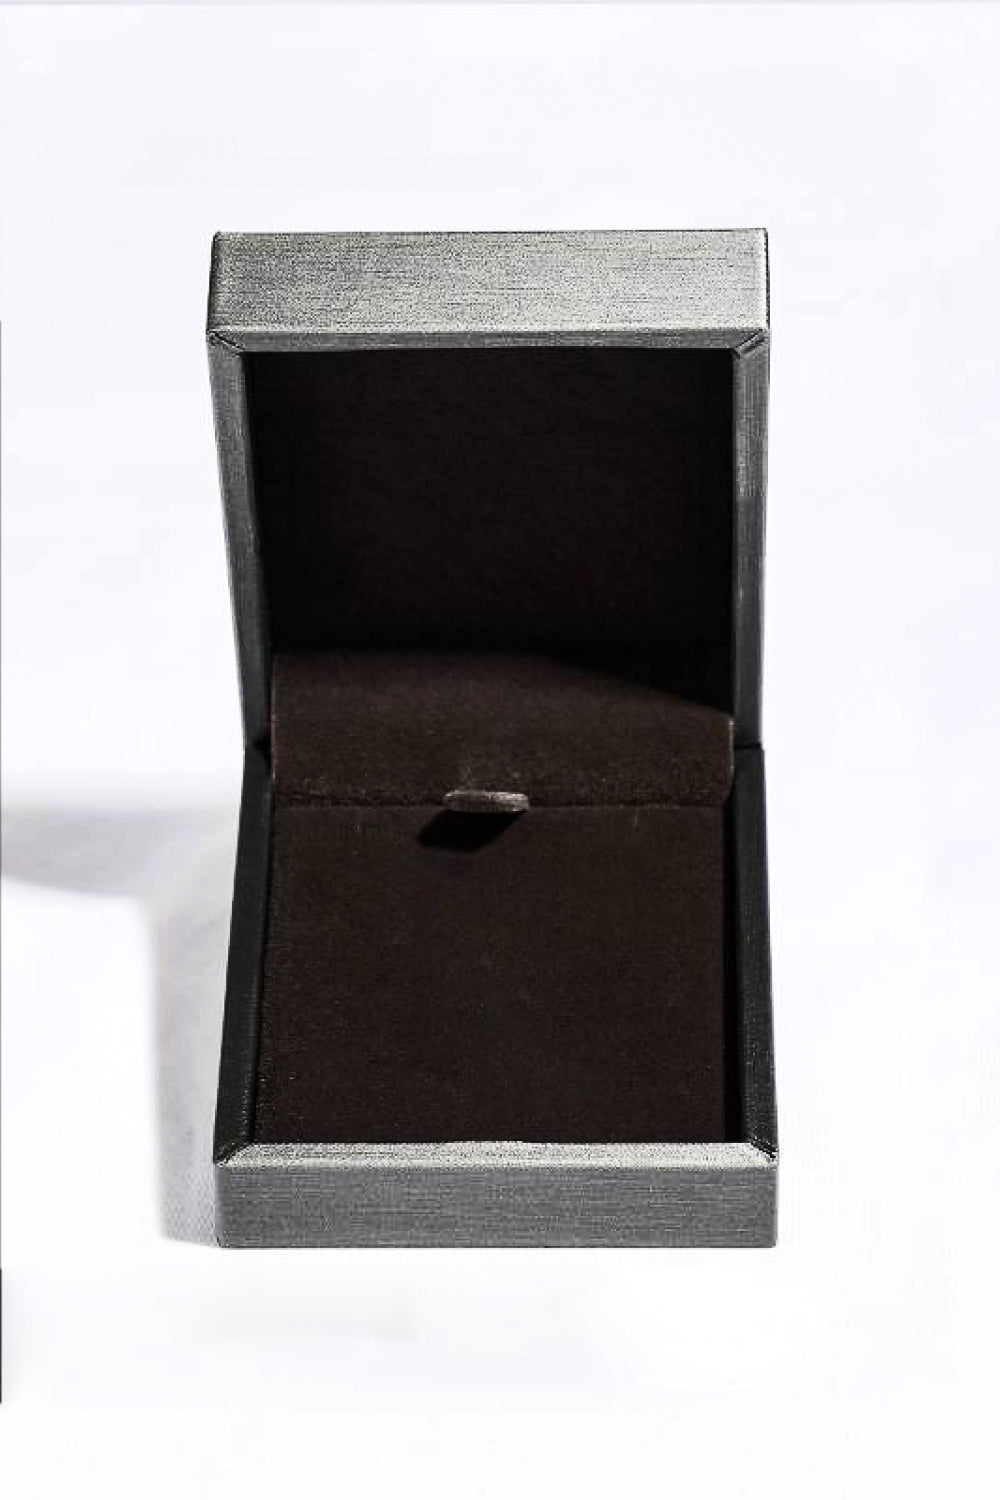 Crowned Key Pendant 1 Carat Moissanite Necklace